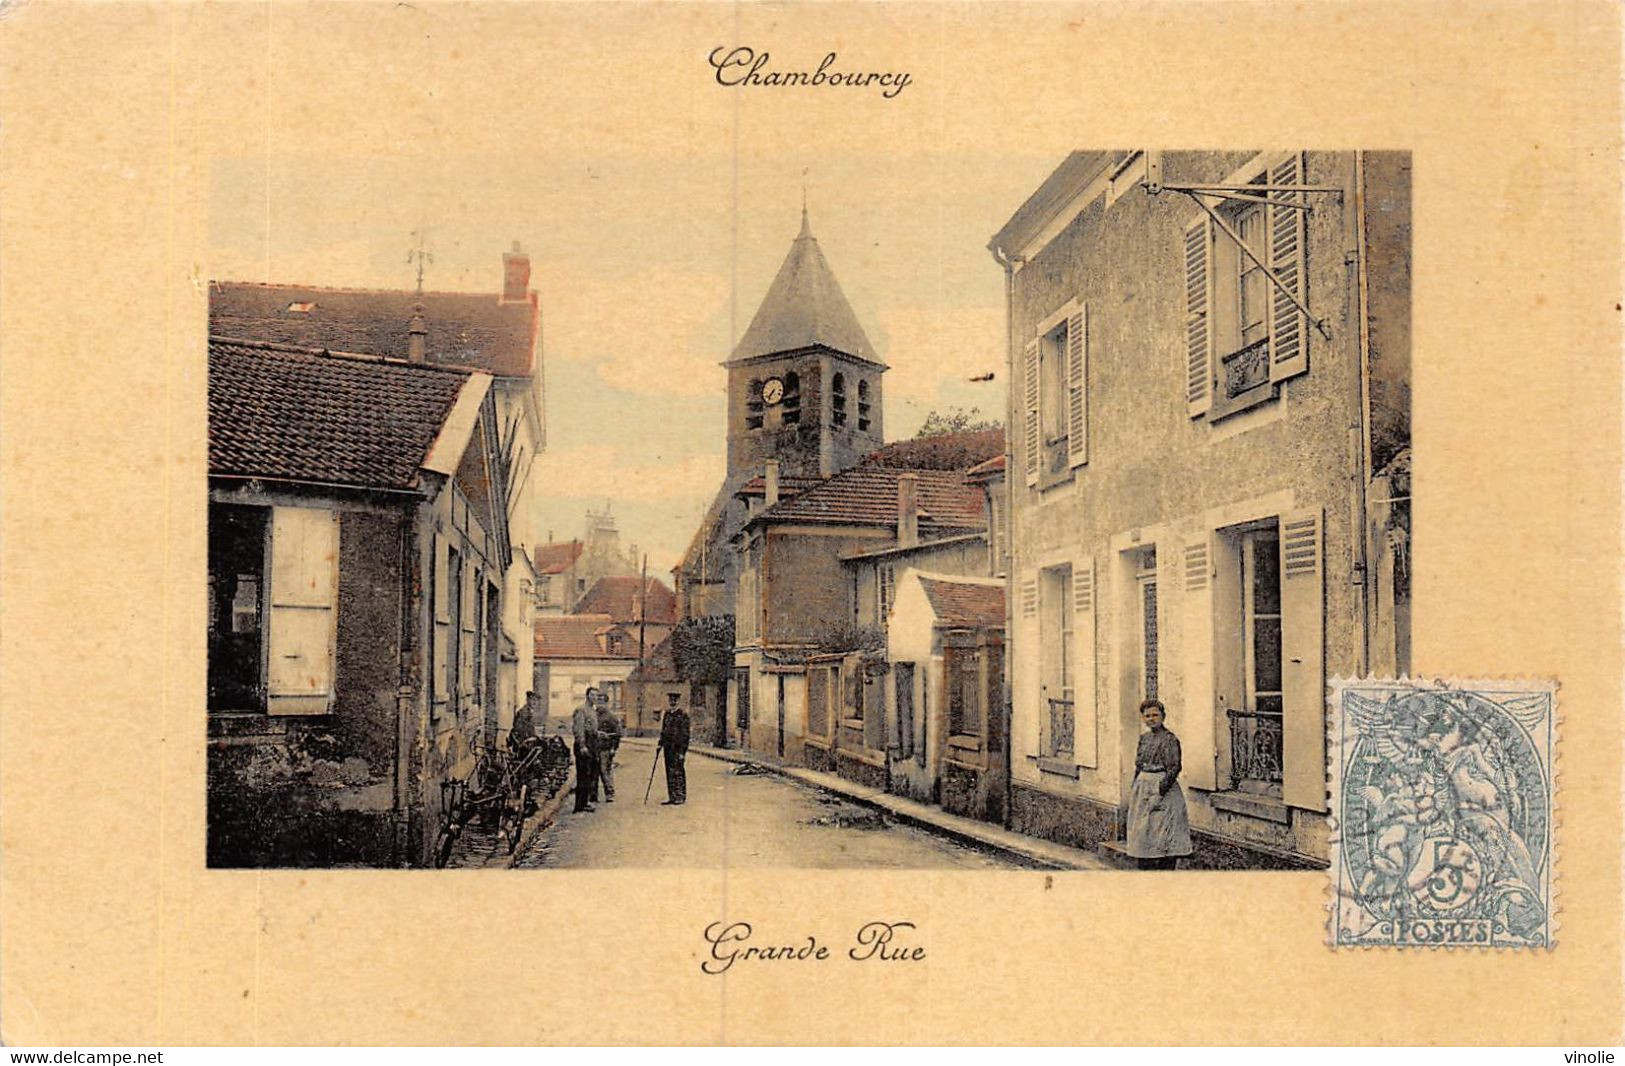 22-157 : CHAMBOURCY. GRANDE RUE - Chambourcy